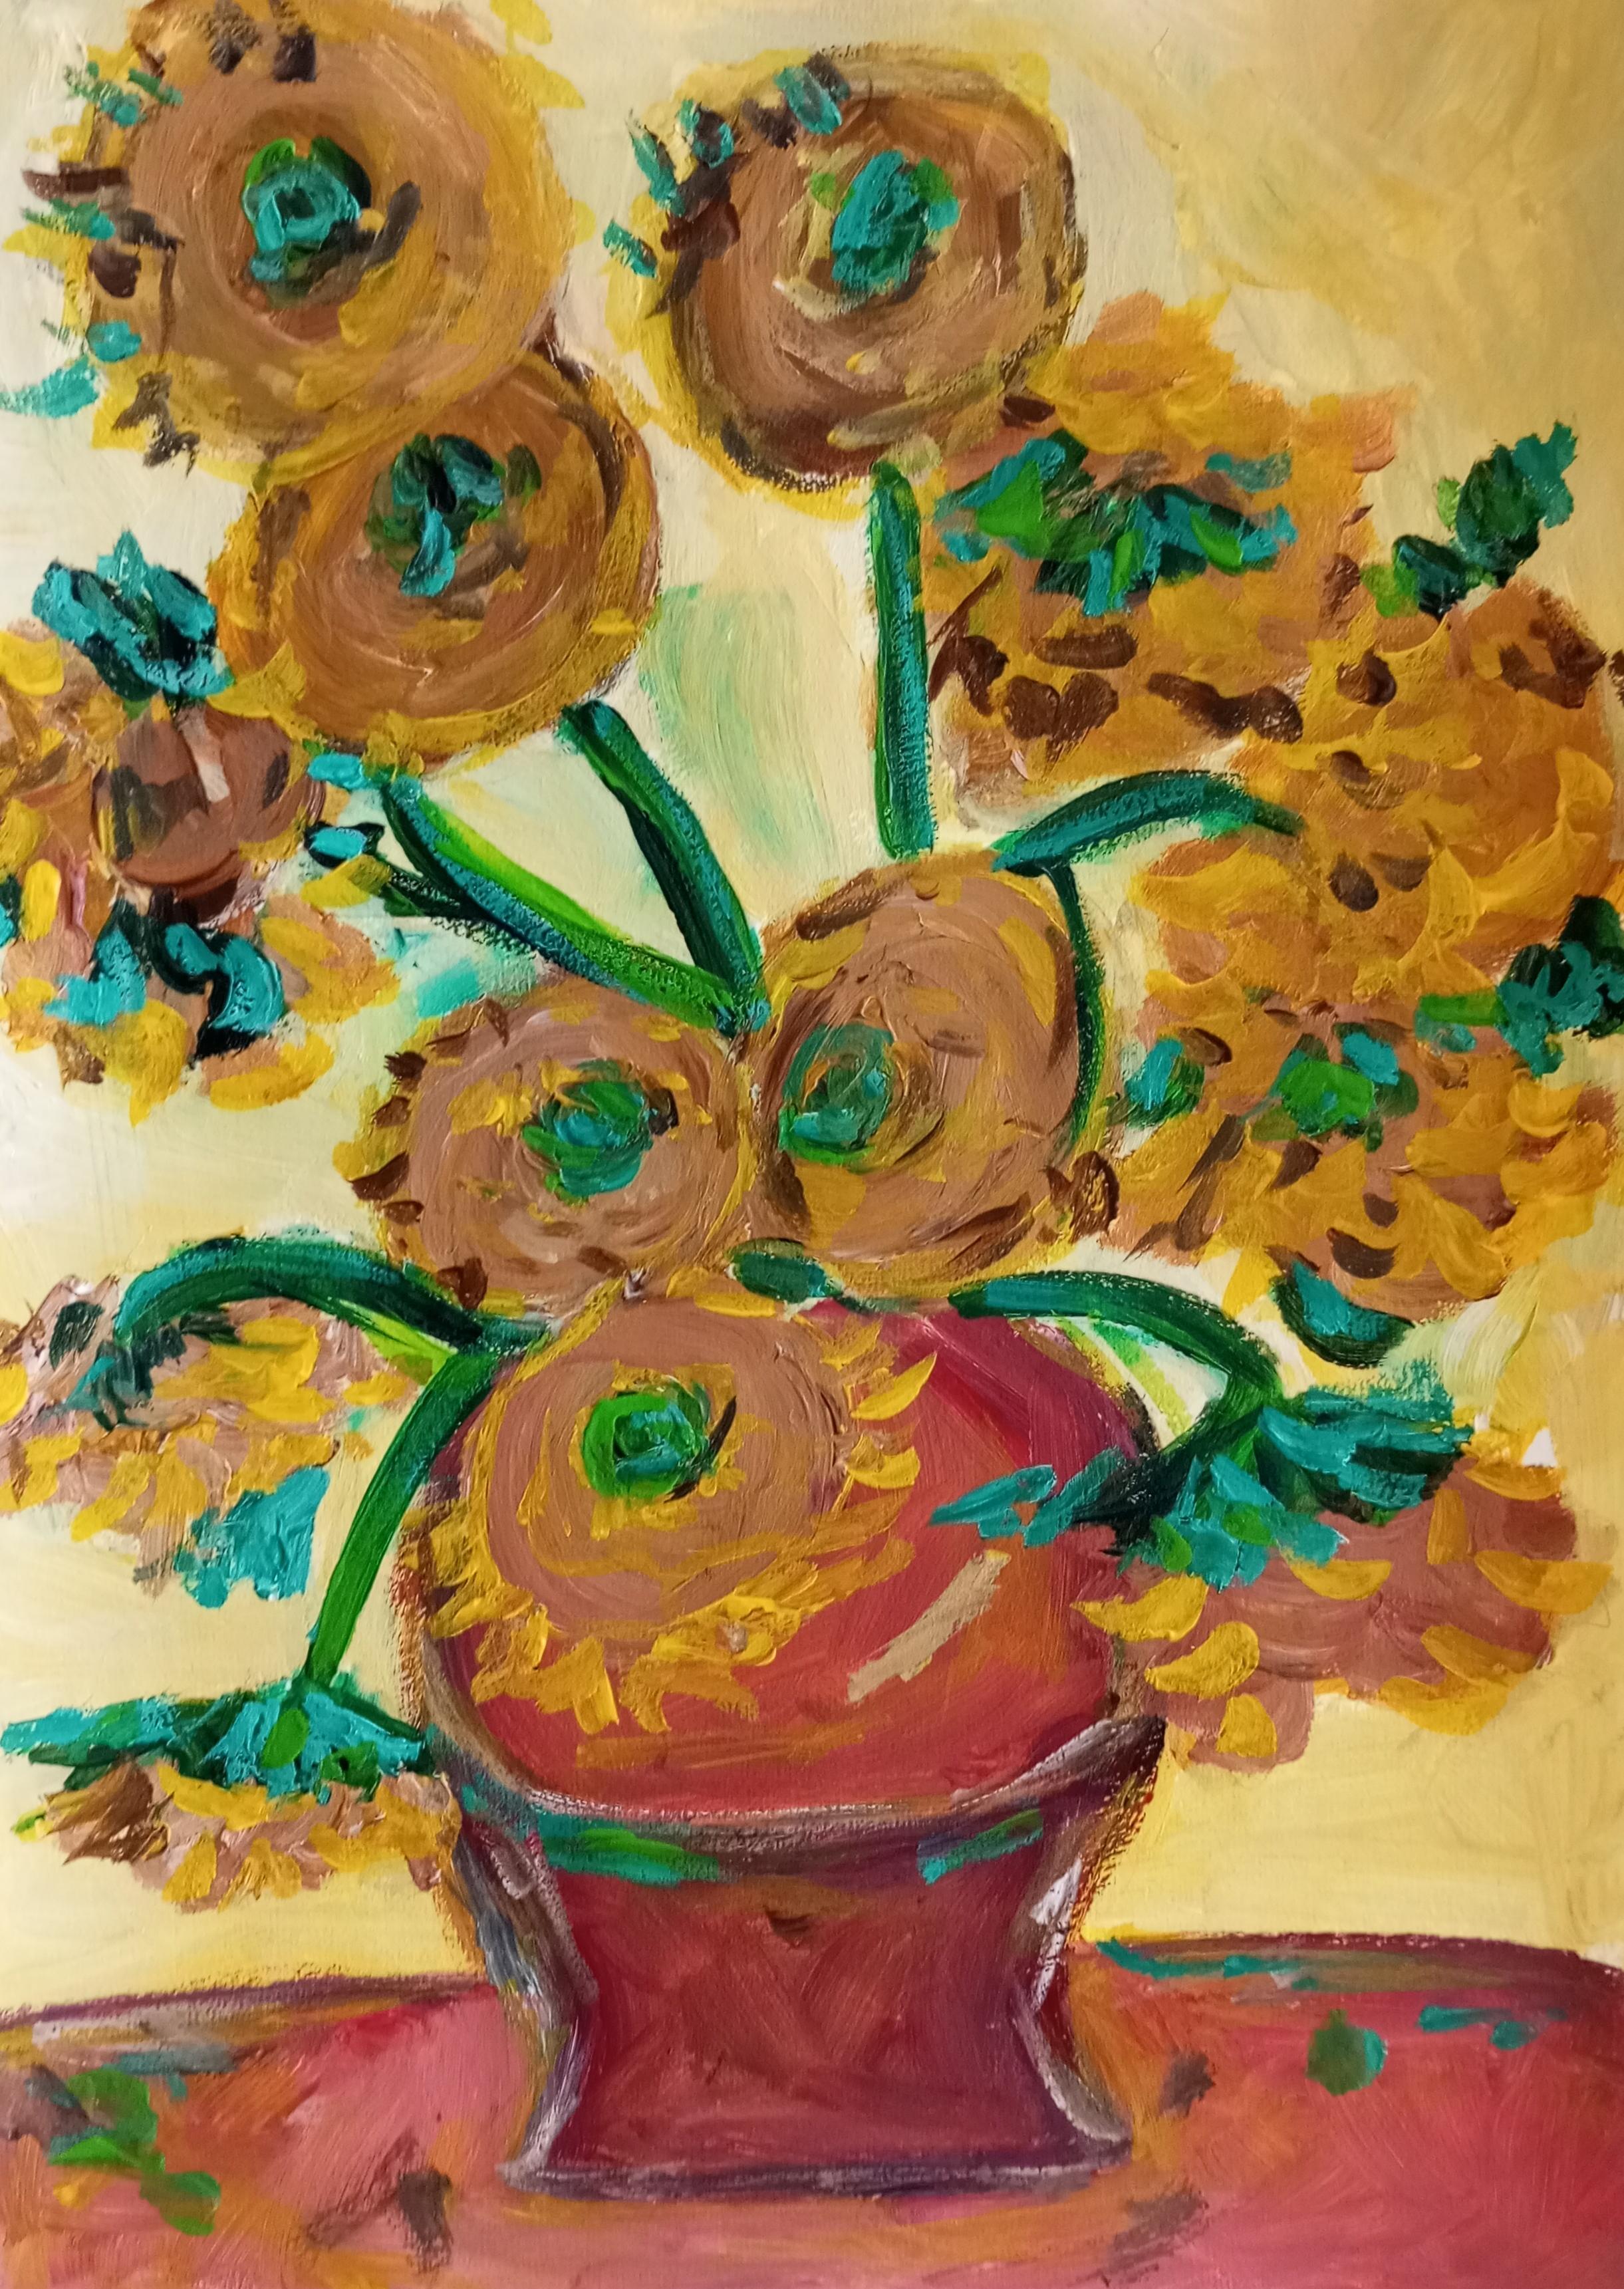 Sunflowers in a terracotta vase